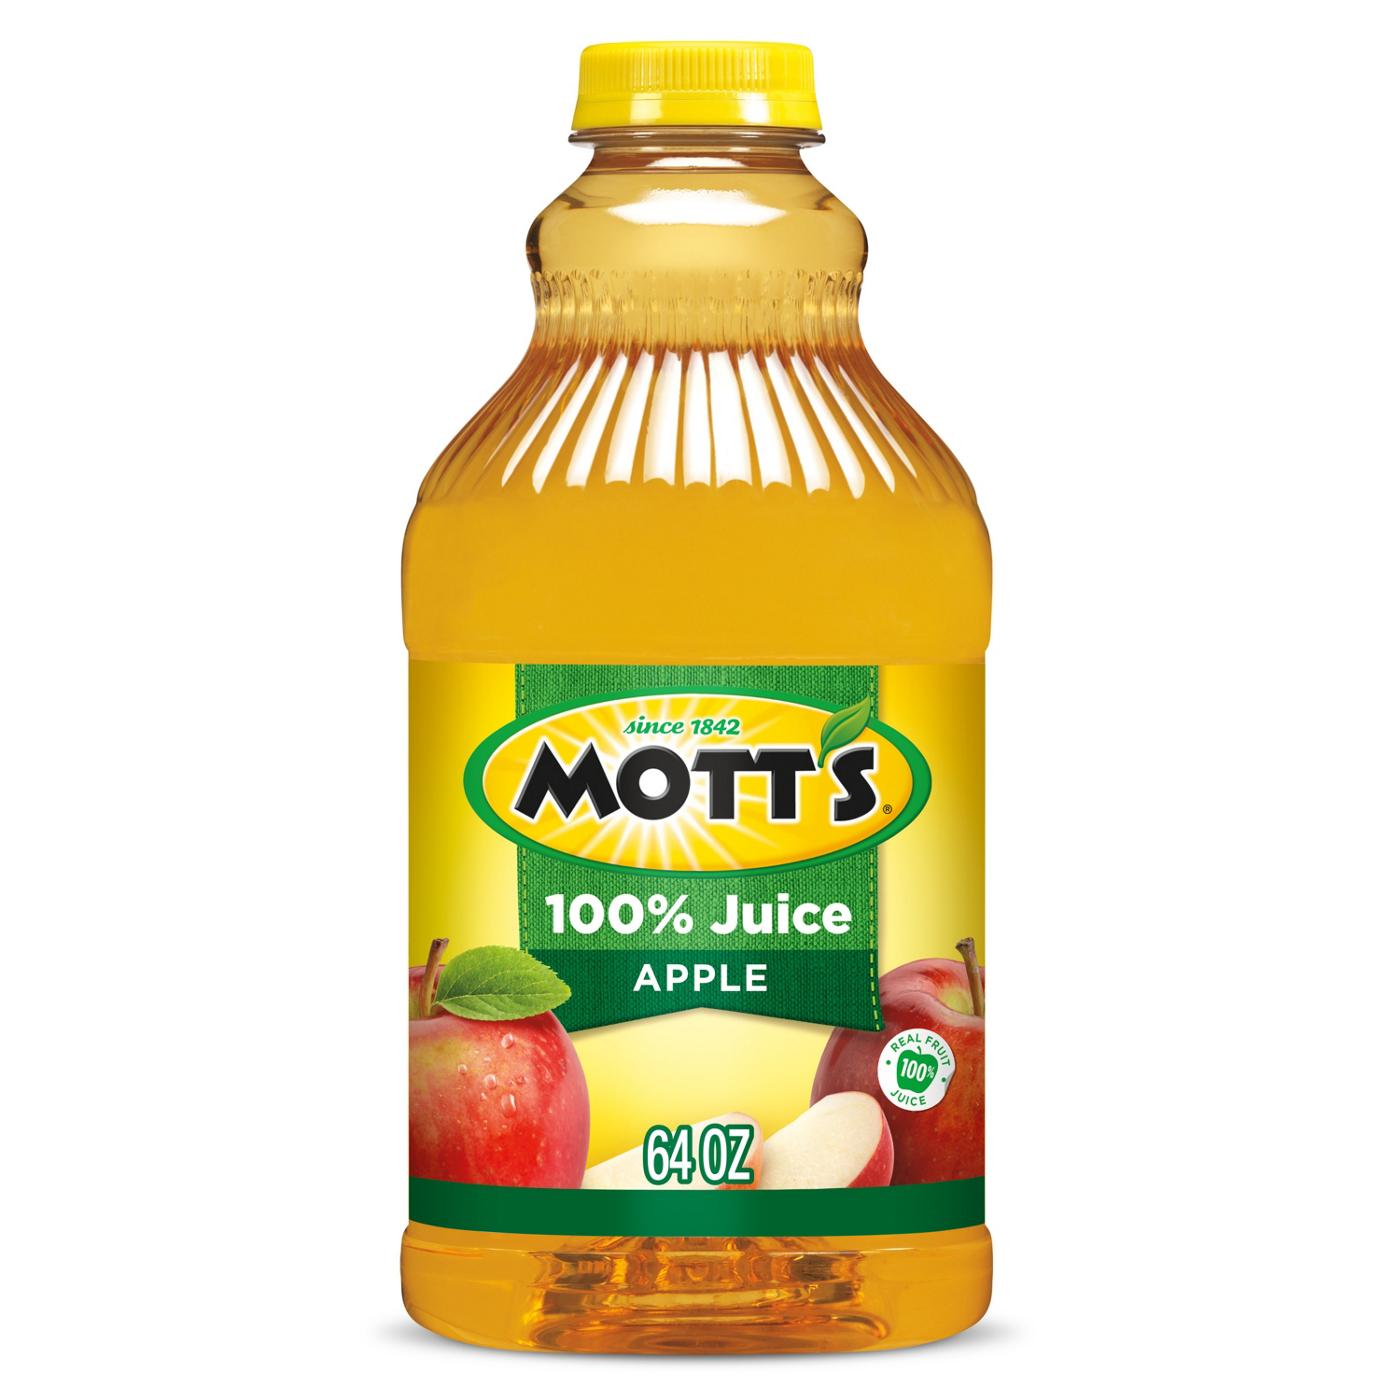 Mott's Original 100% Apple Juice; image 6 of 6